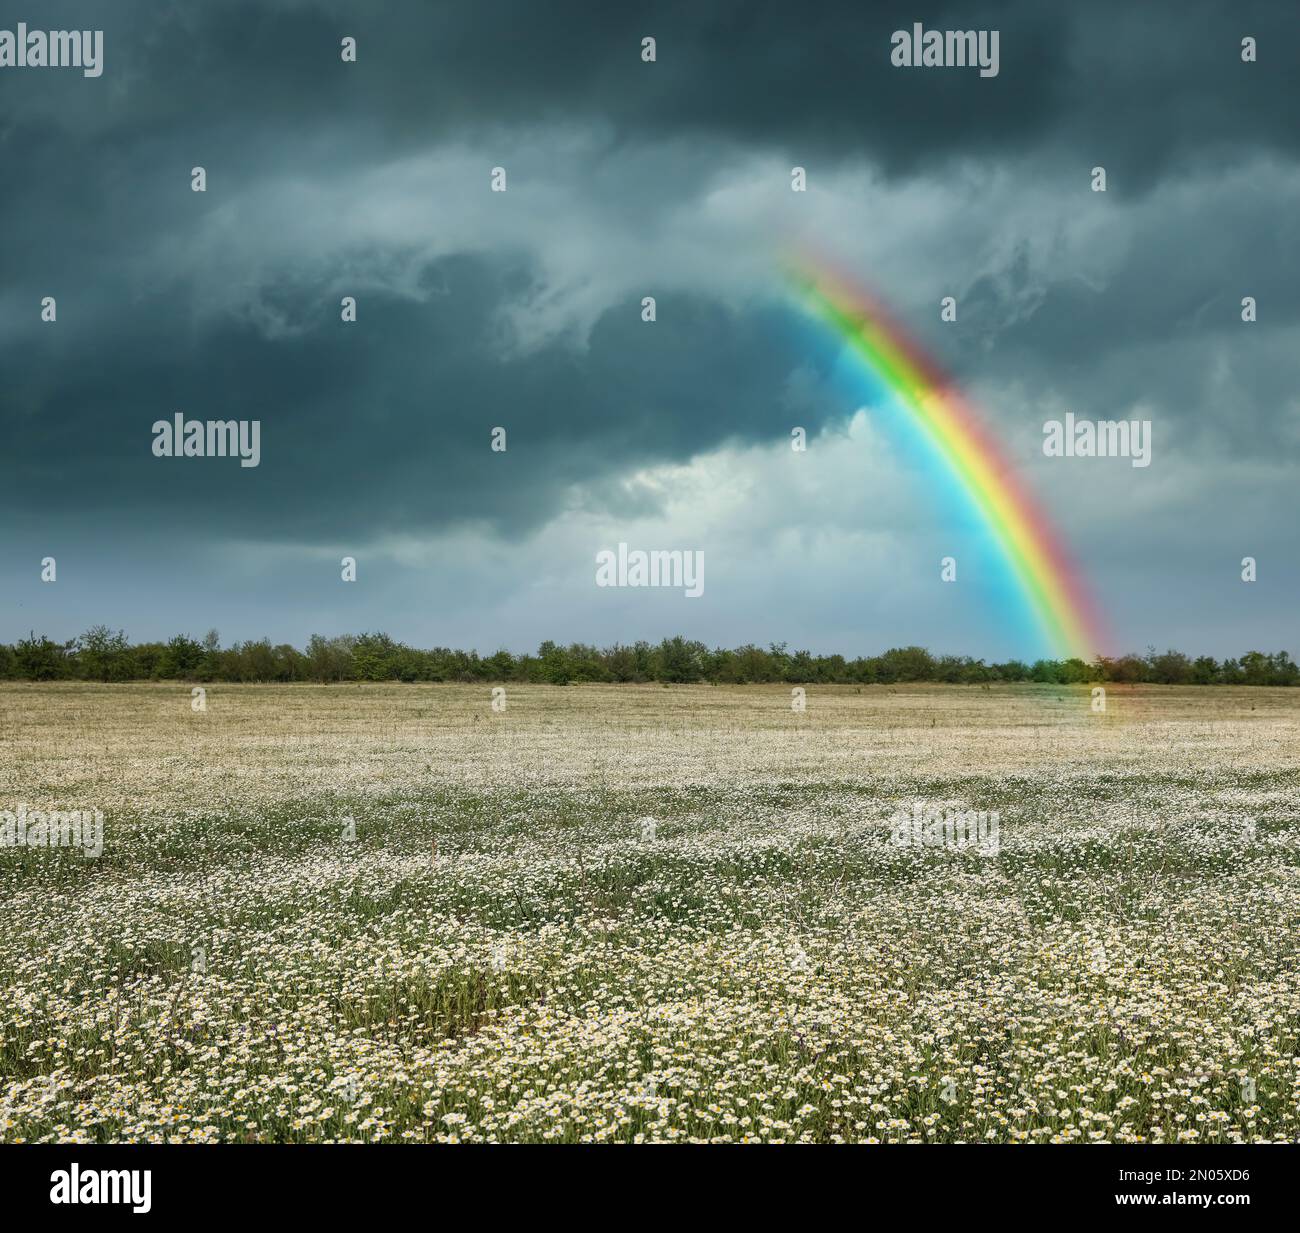 Amazing rainbow over chamomile field under stormy sky Stock Photo